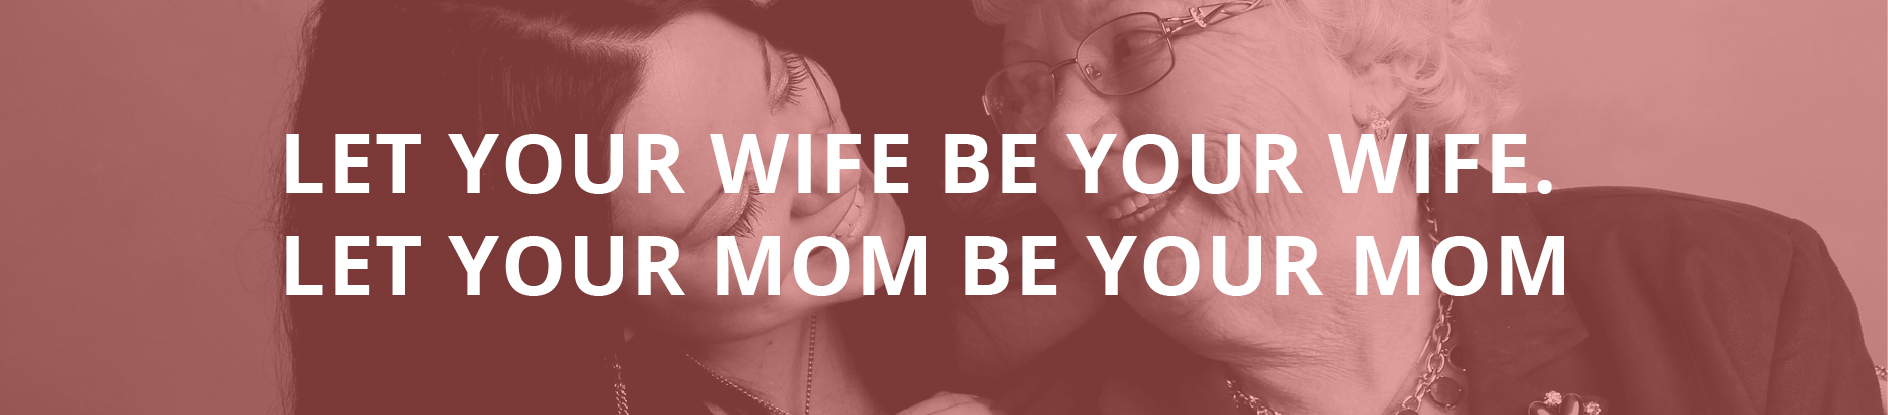 let-your-wife-be-your-wife-let-your-mom-be-your-mom